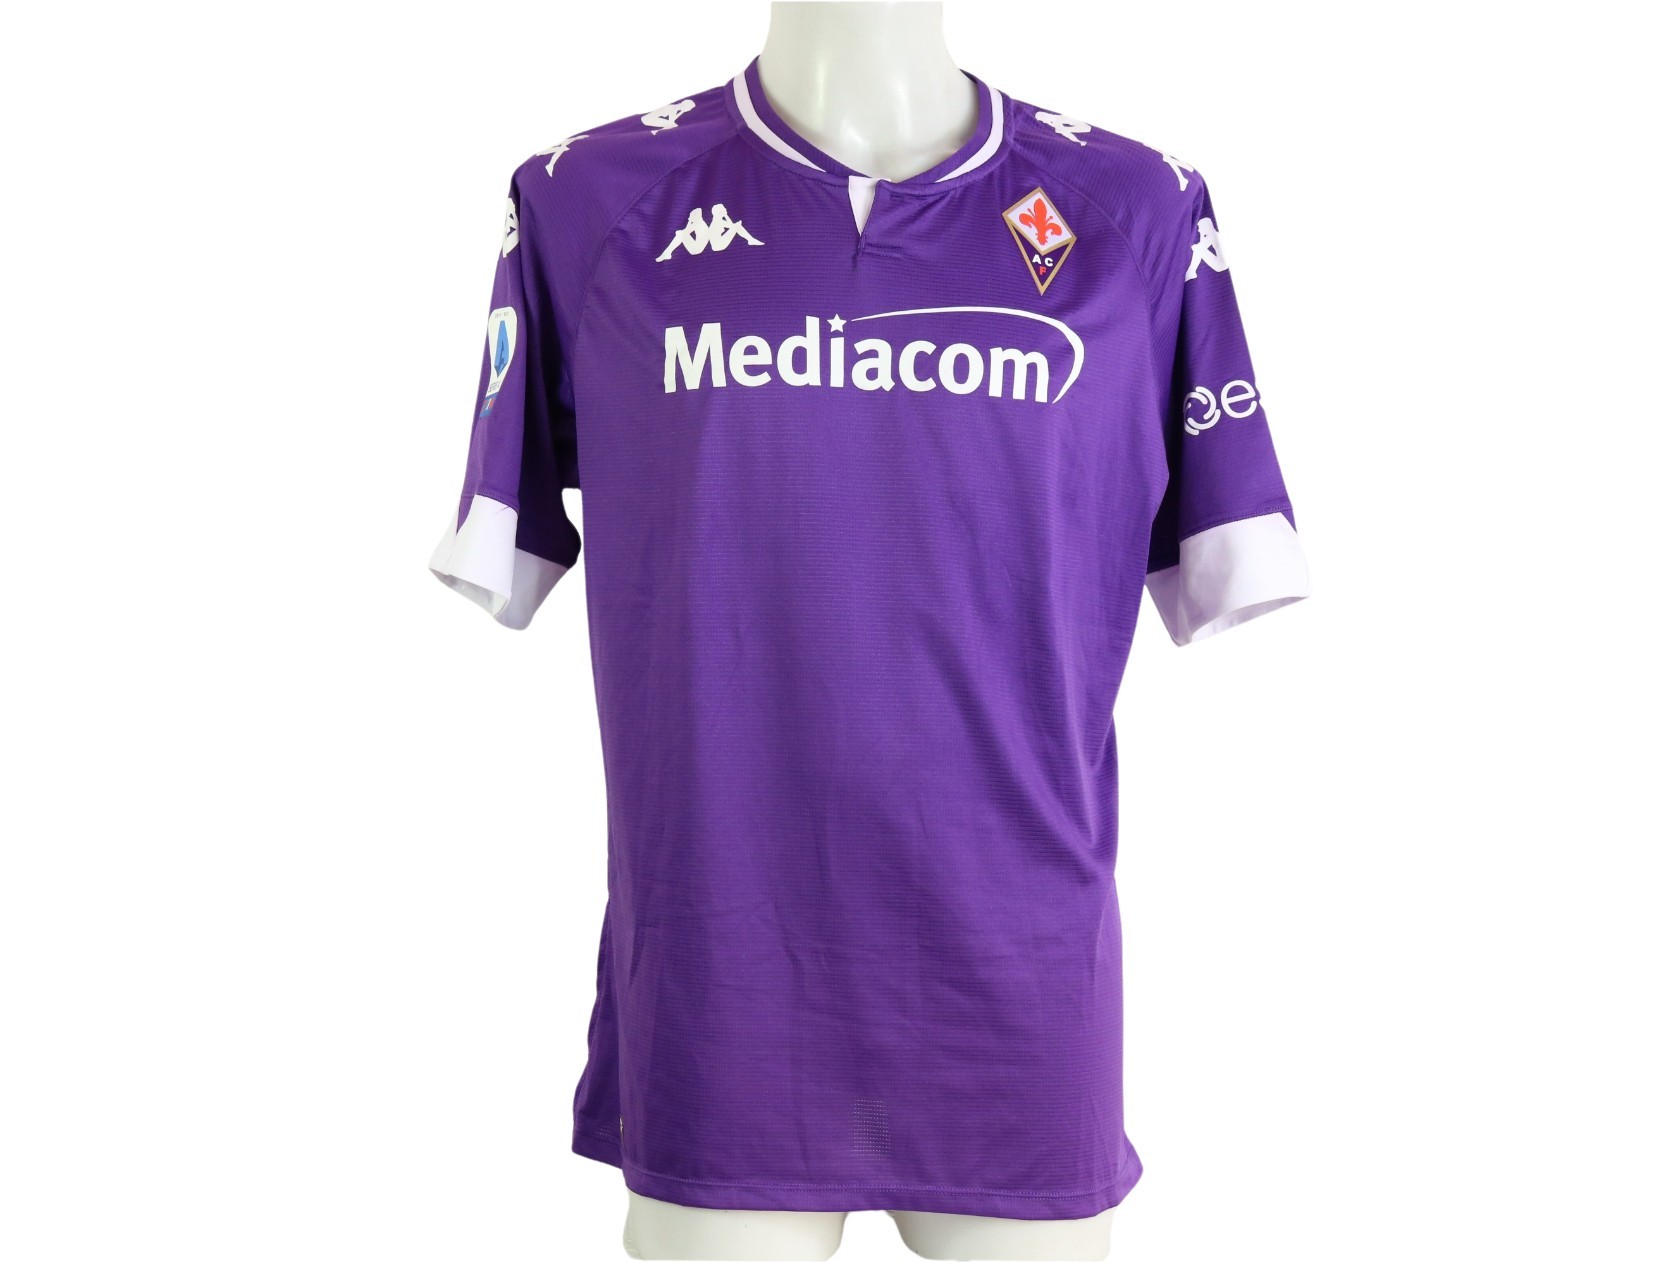 Giuseppe Rossi Signed ACF Fiorentina Picture - CharityStars